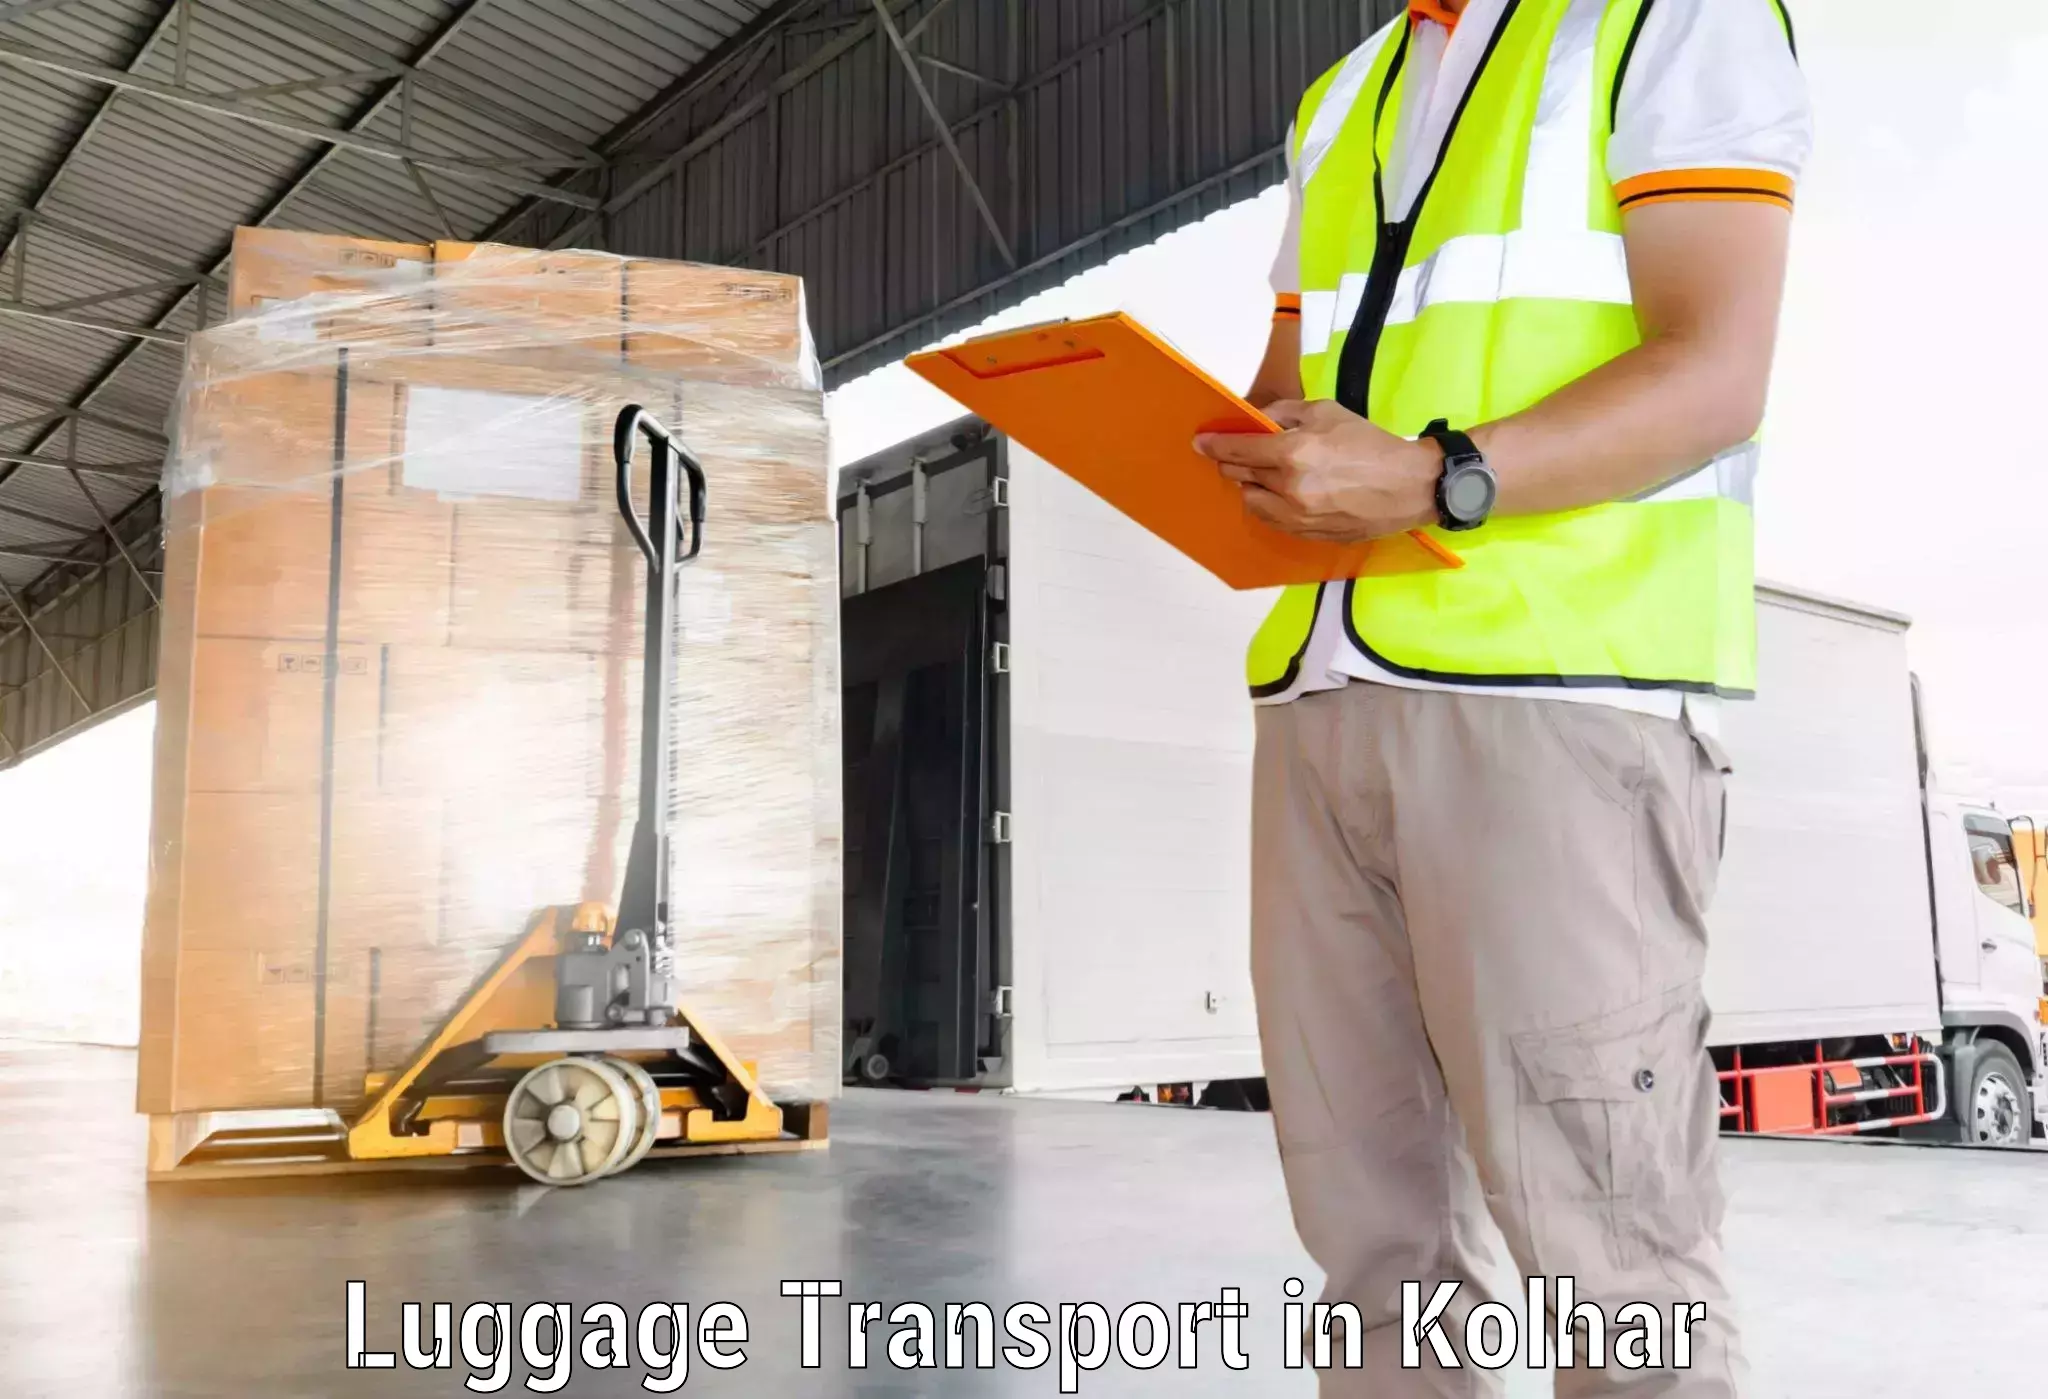 Same day luggage service in Kolhar